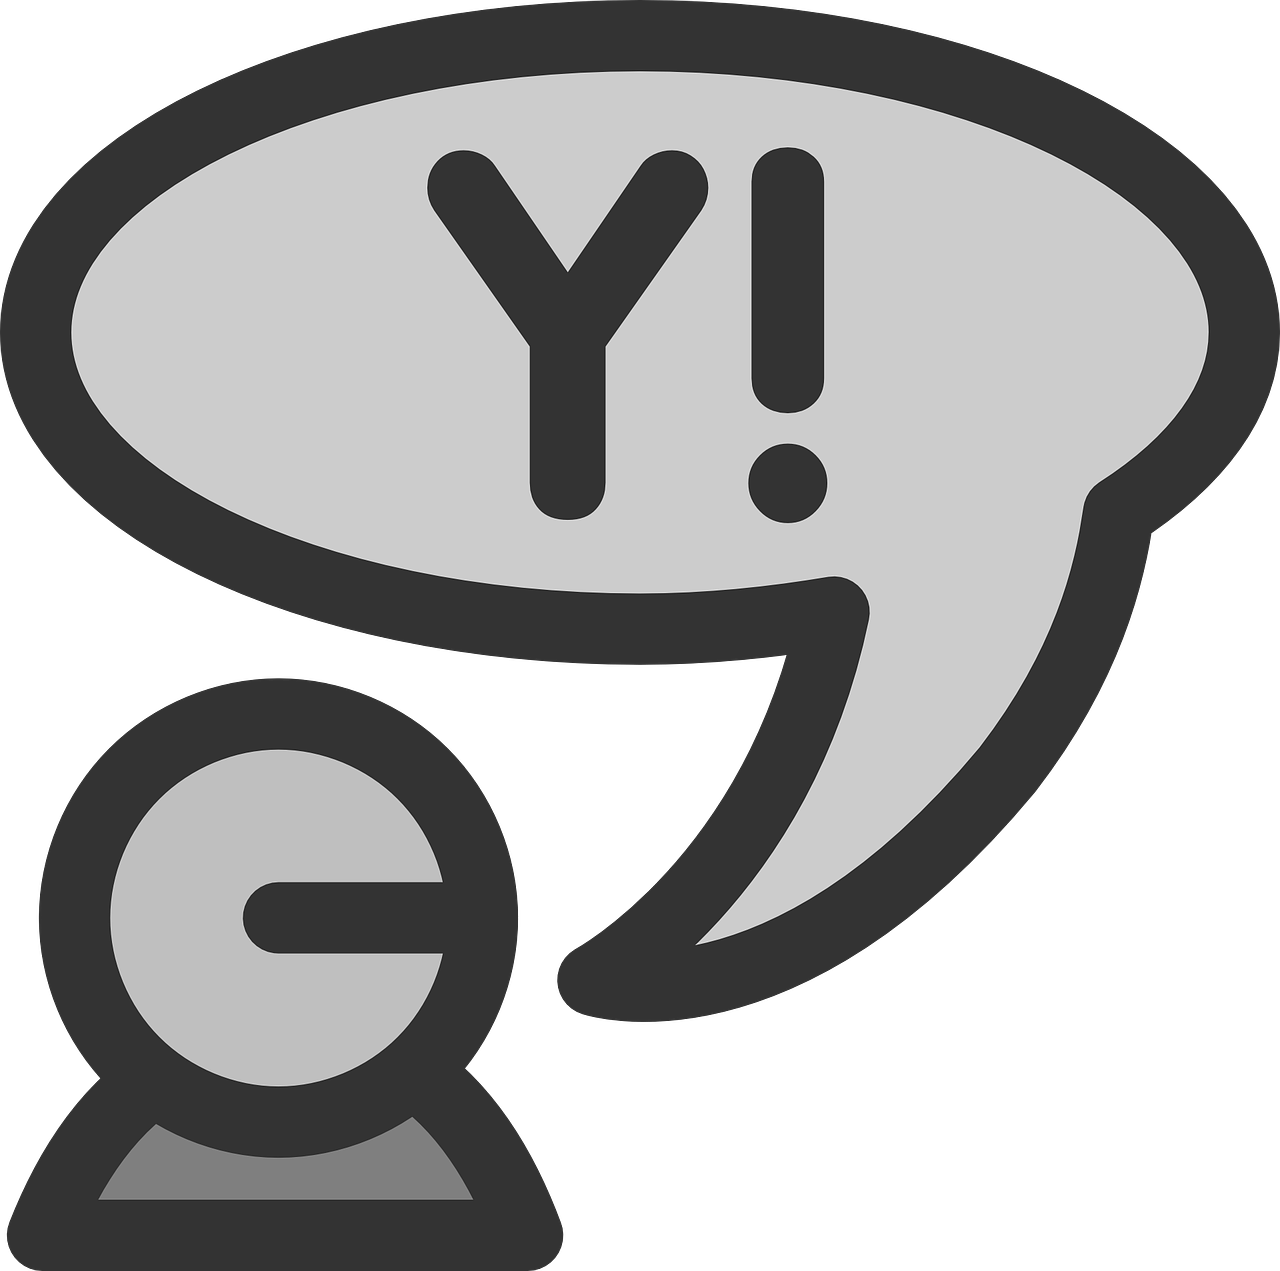 yahoo icon symbol free photo